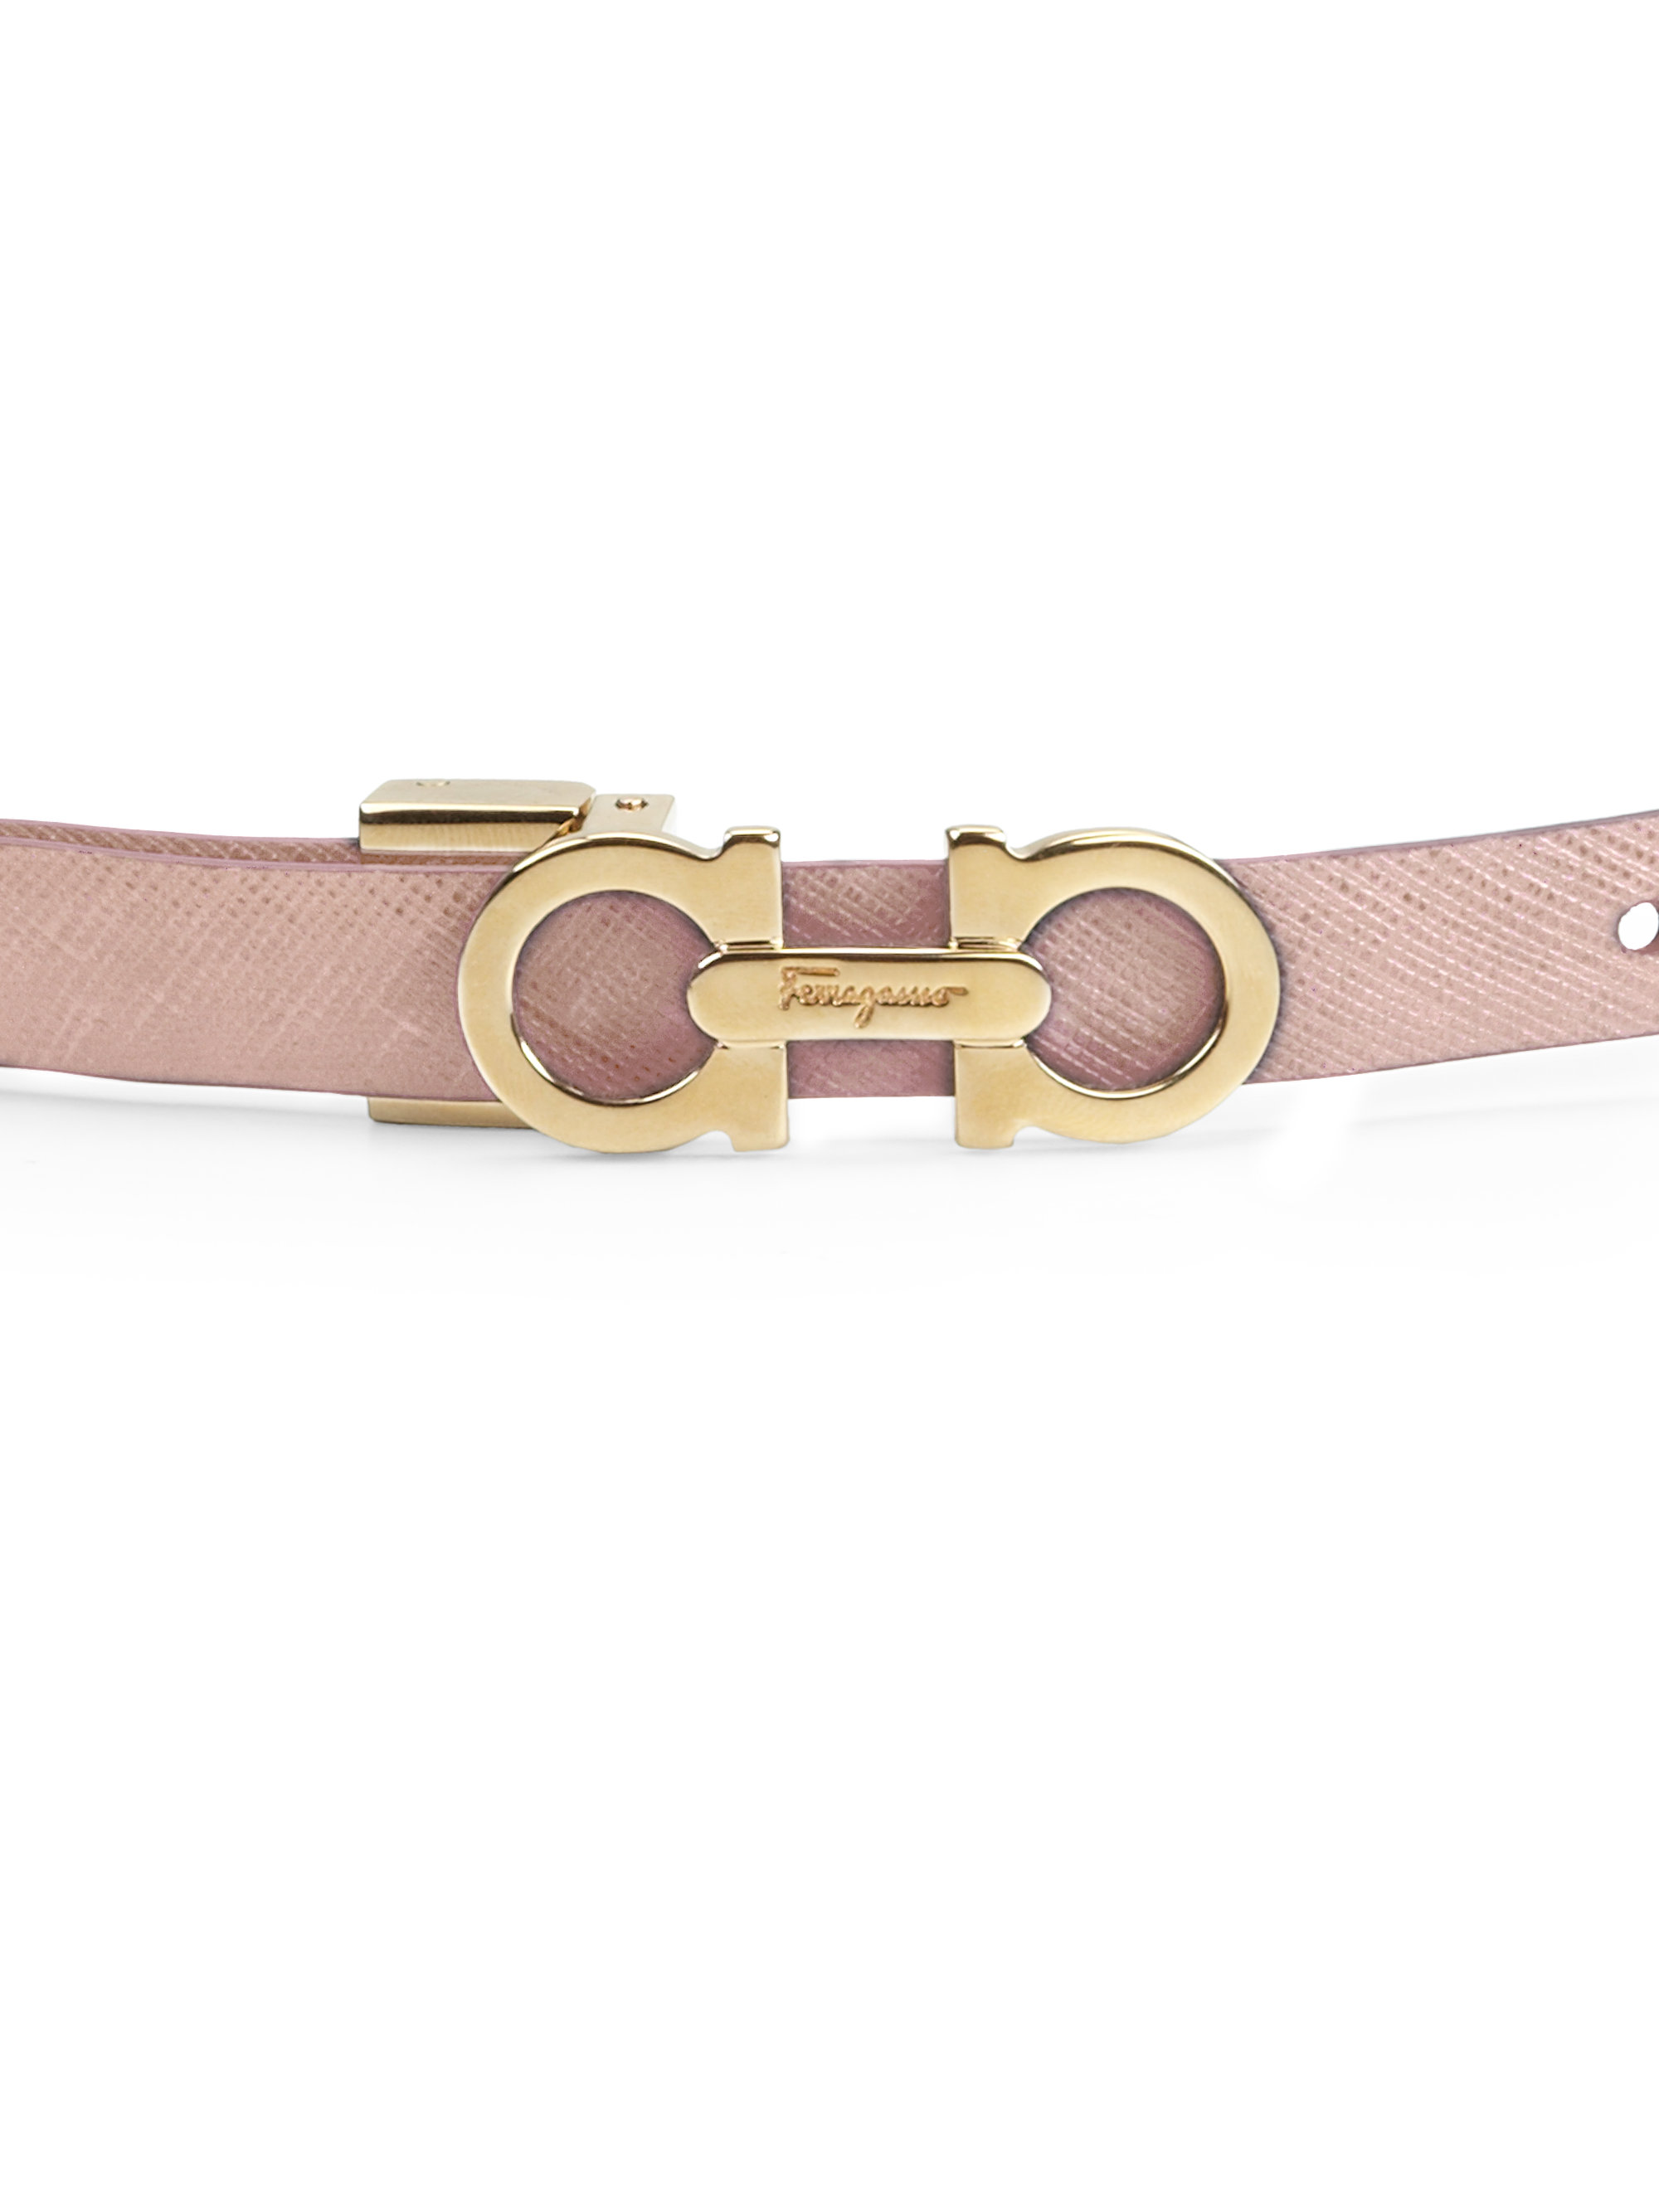 Ferragamo Skinny Gancini Leather Belt in Pink - Lyst